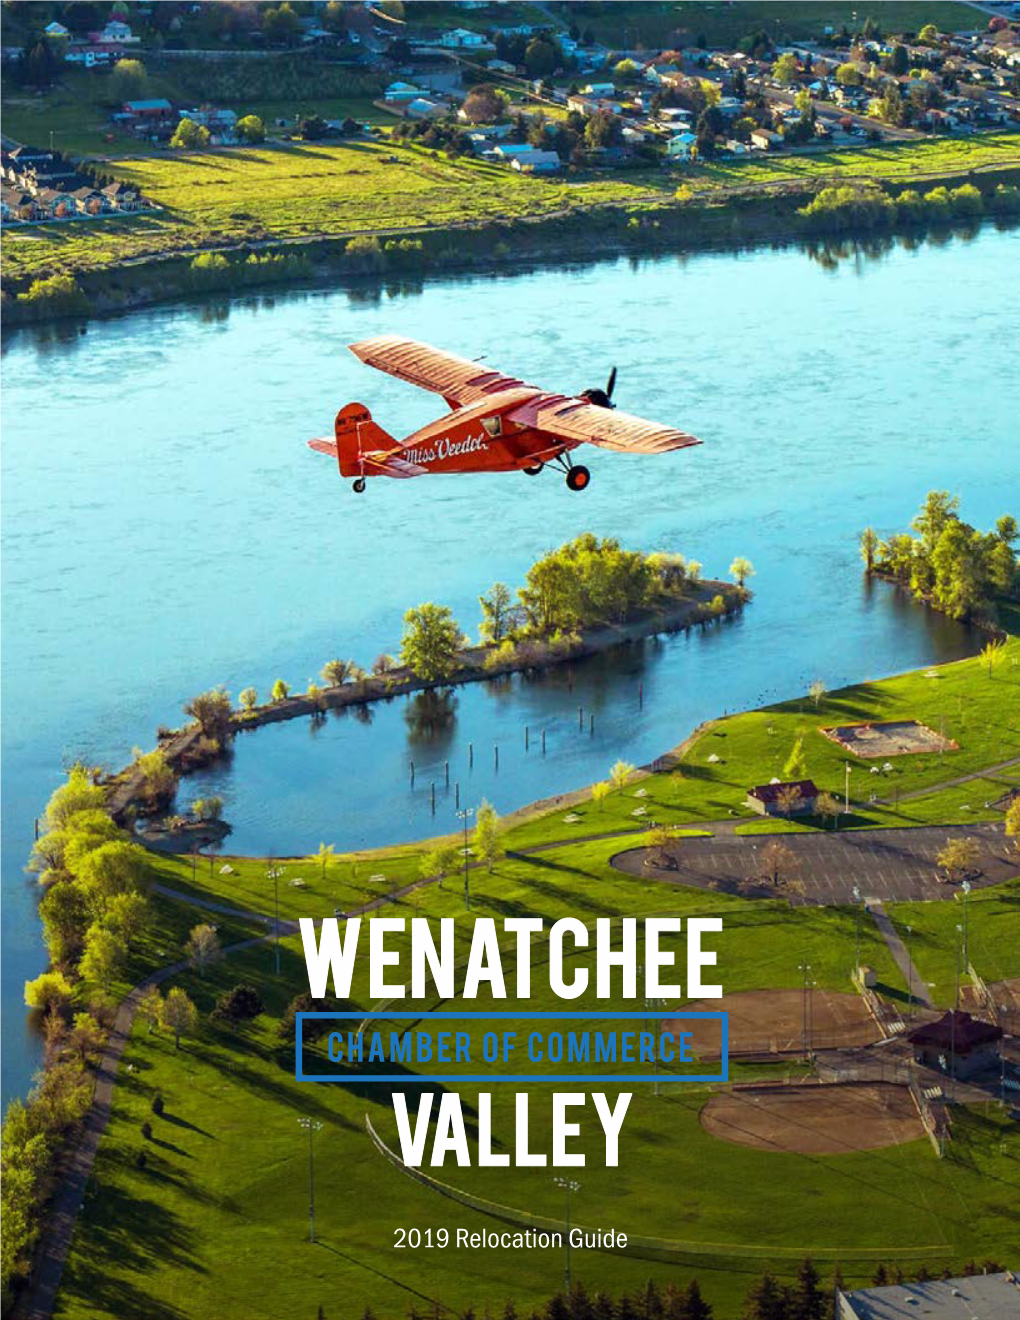 2019 Relocation Guide Visitwenatchee.Org | Wenatchee.Org | 509.662.2116 the Wenatchee Valley Unsurpassed Quality of Life